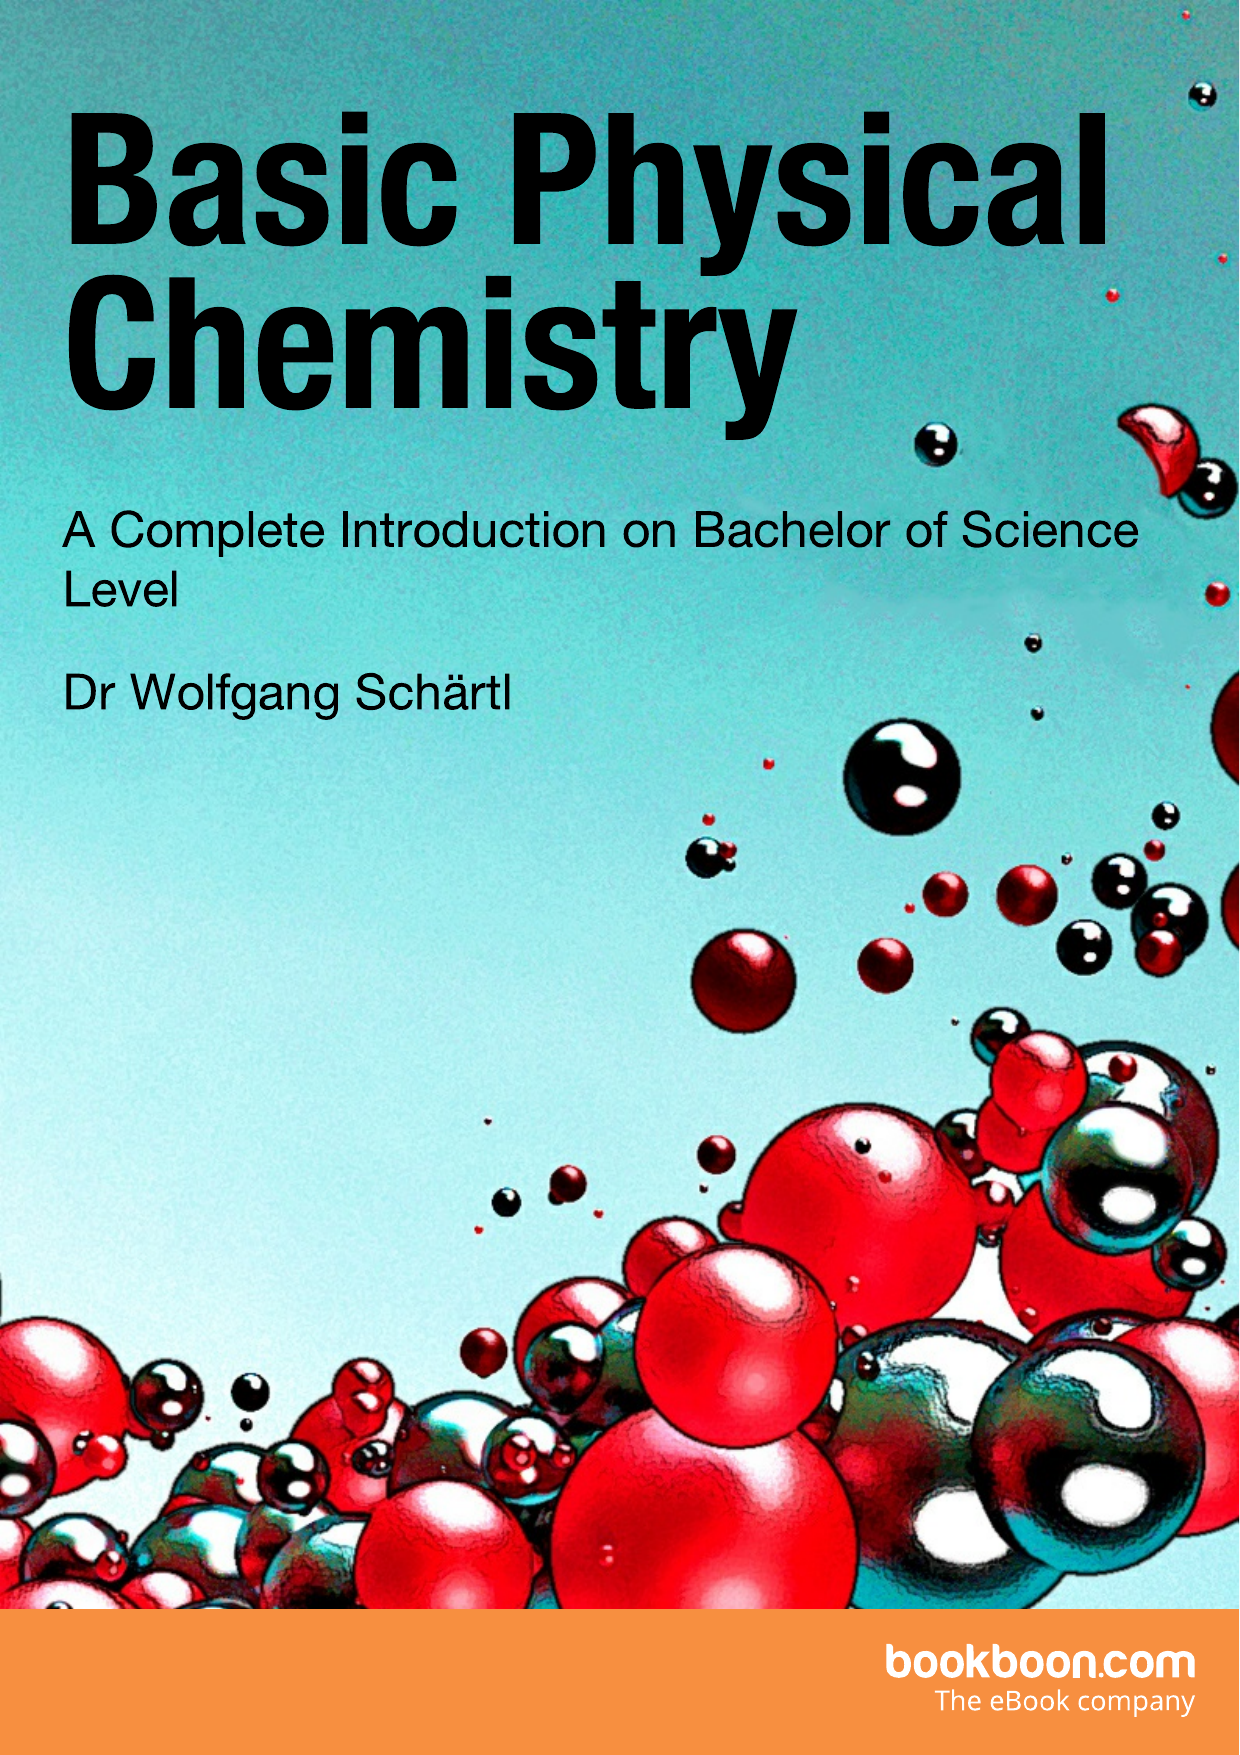 Physical chemical. Physical Chemistry. Basic химия. Physical Chemistry Chemical physics. Introduction Chemistry.